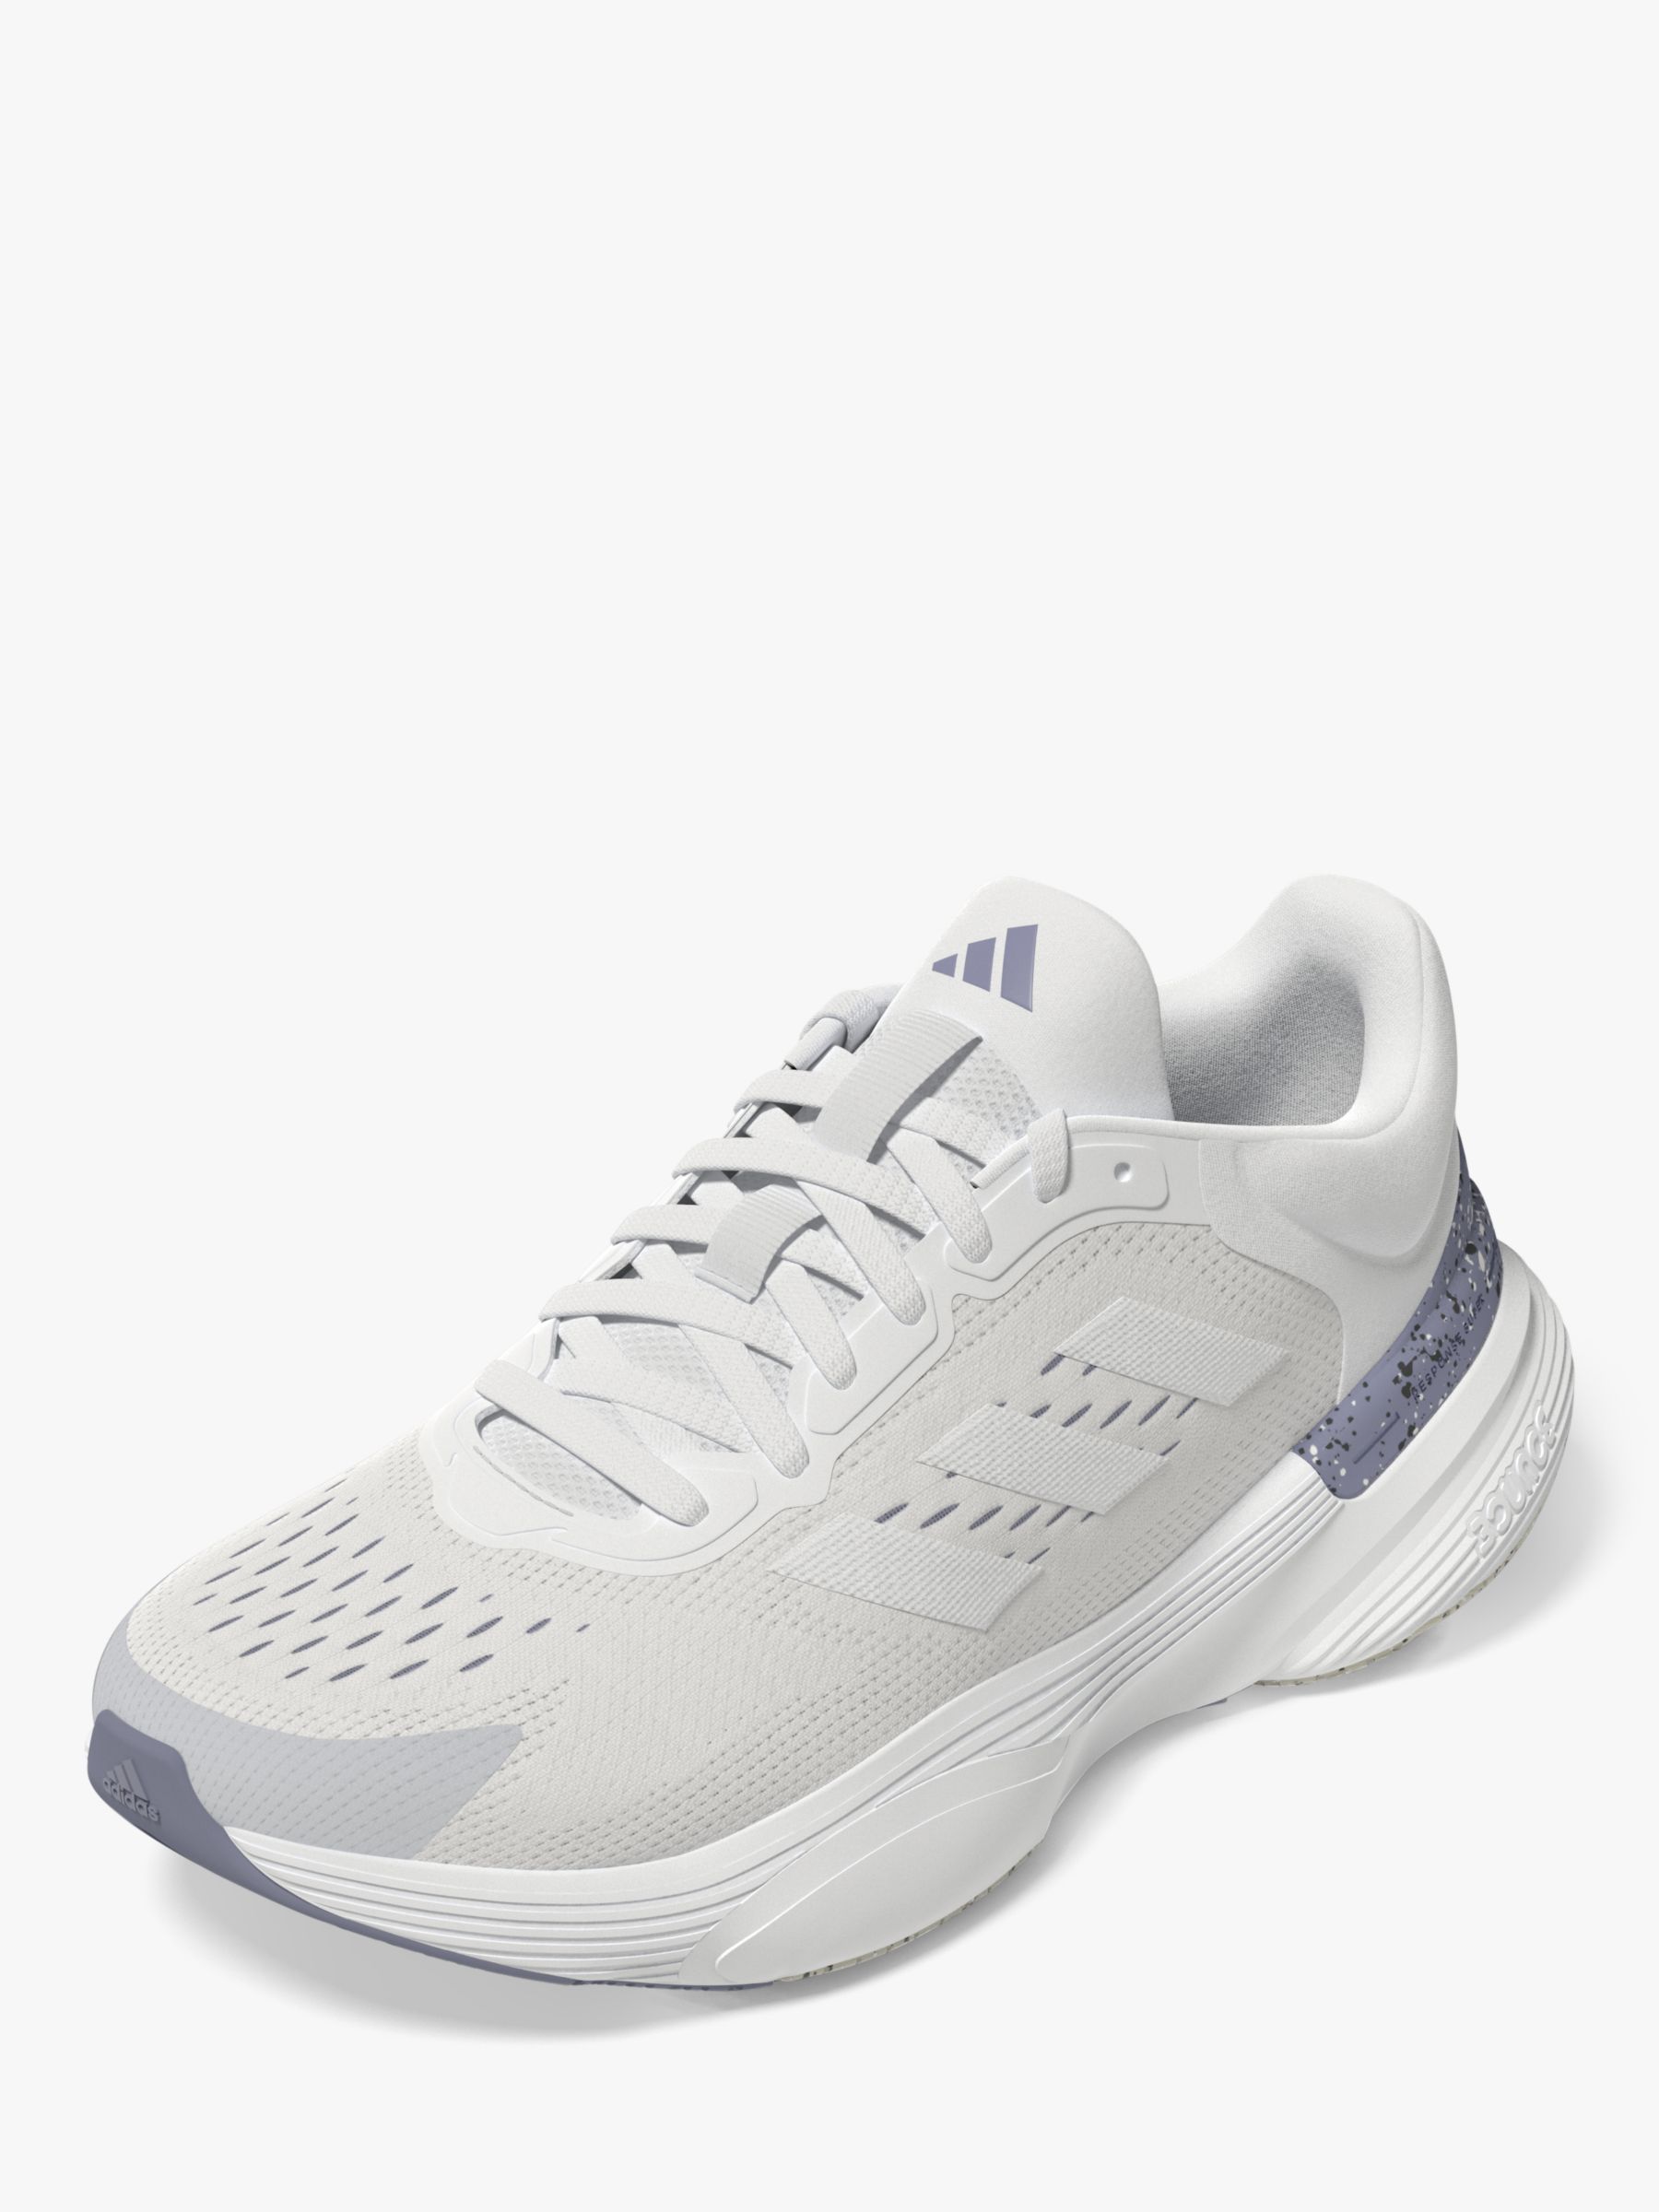 adidas Response Super 3.0 Women's Running Shoes, White/Cloud White/Silver John Lewis & Partners